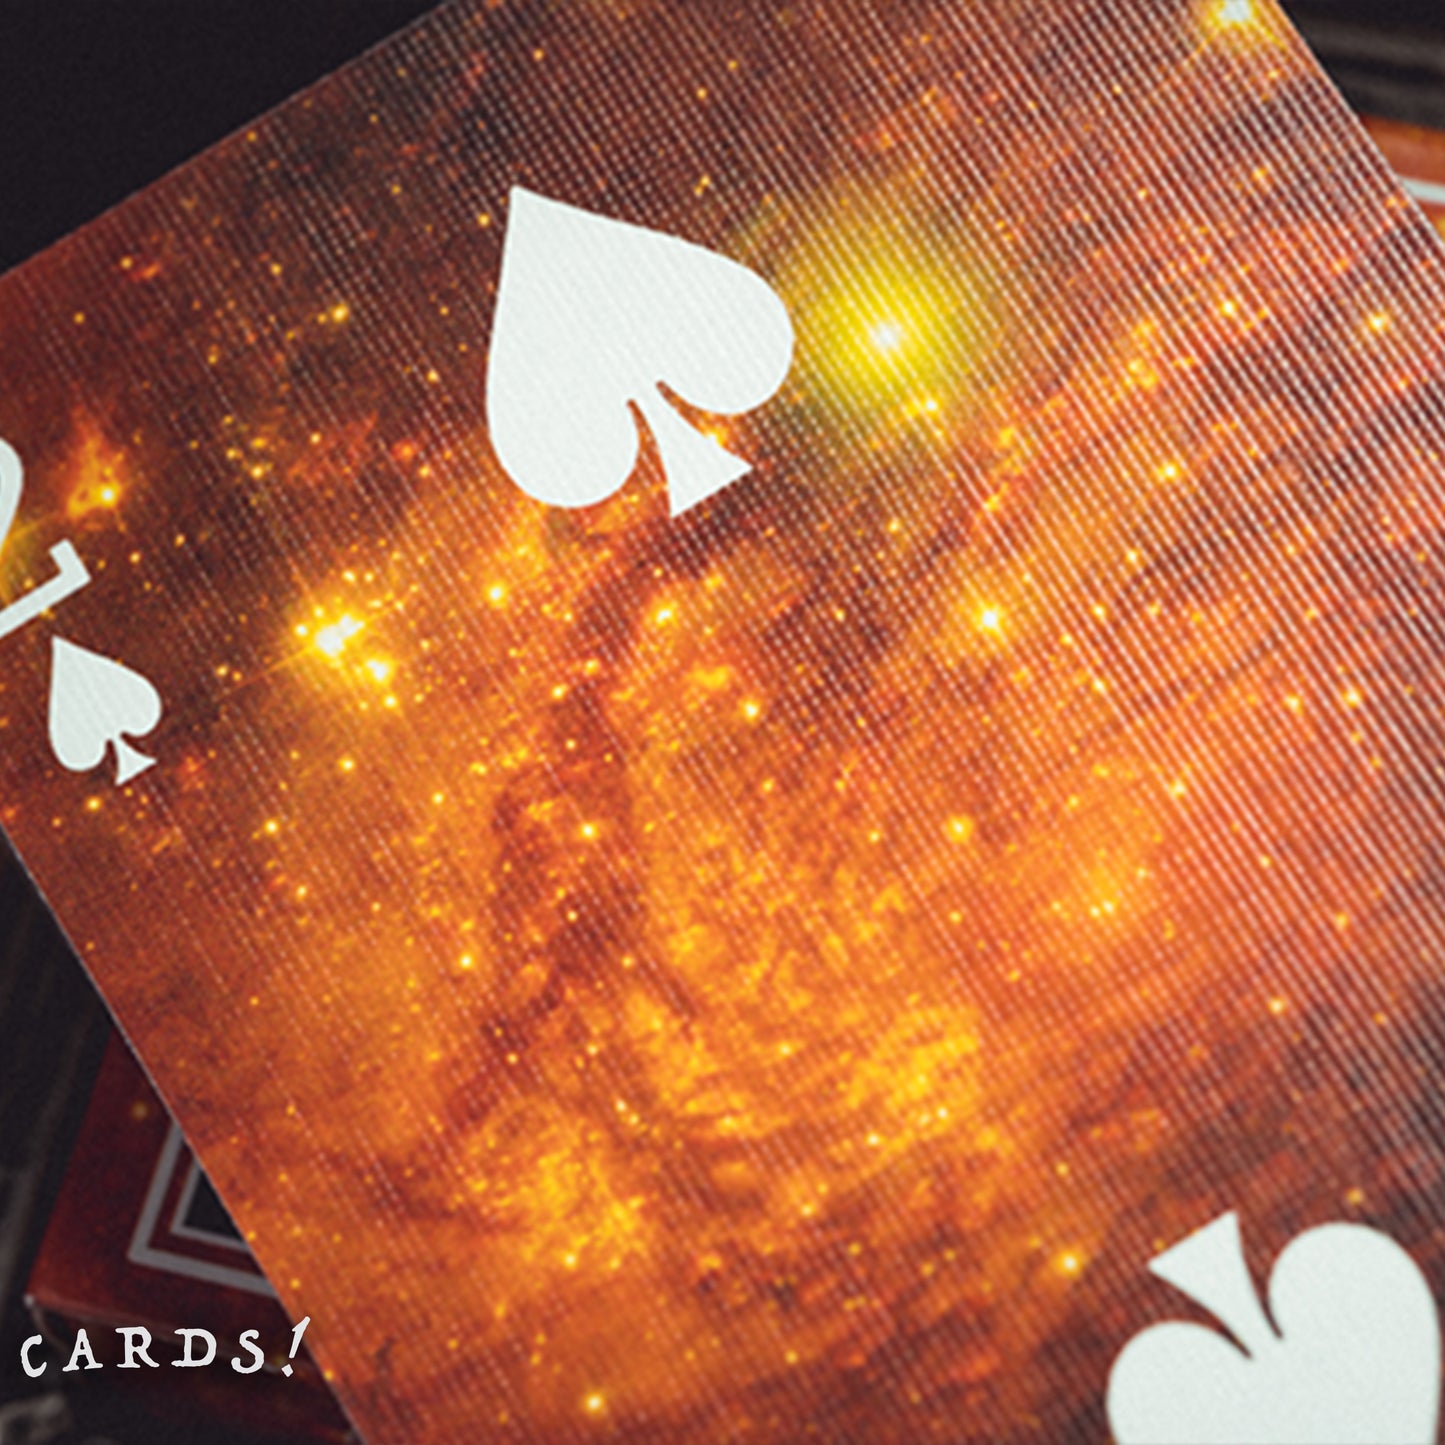 Bicycle® Constellation (Taurus) Playing Cards